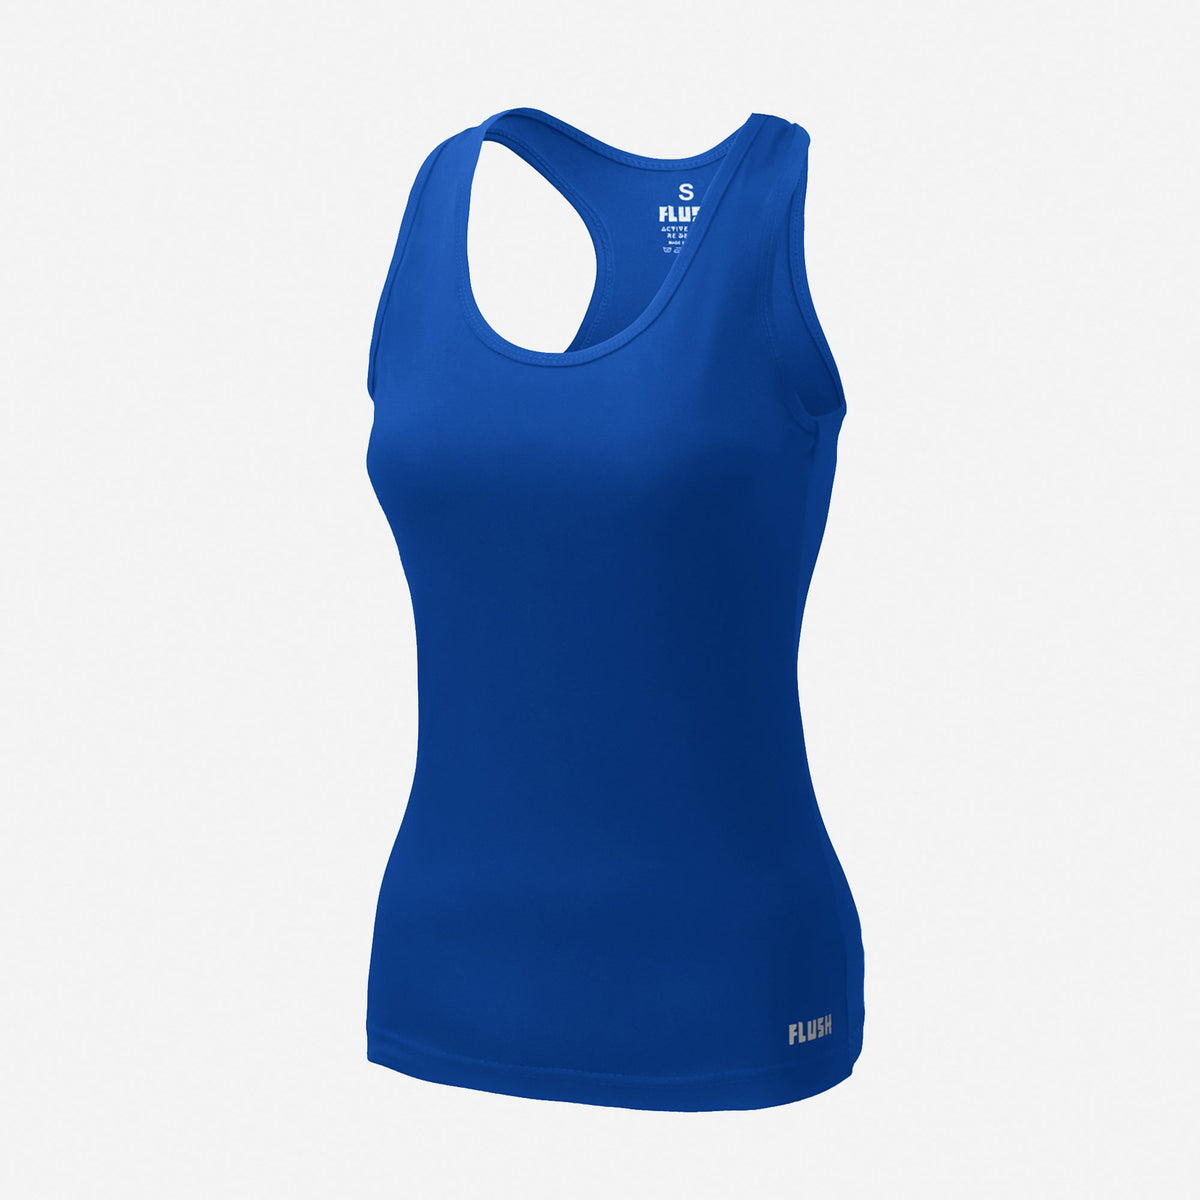 Women's Tank Top Ribbed Yoga Racerback Long Tight Fit Gym Shirt